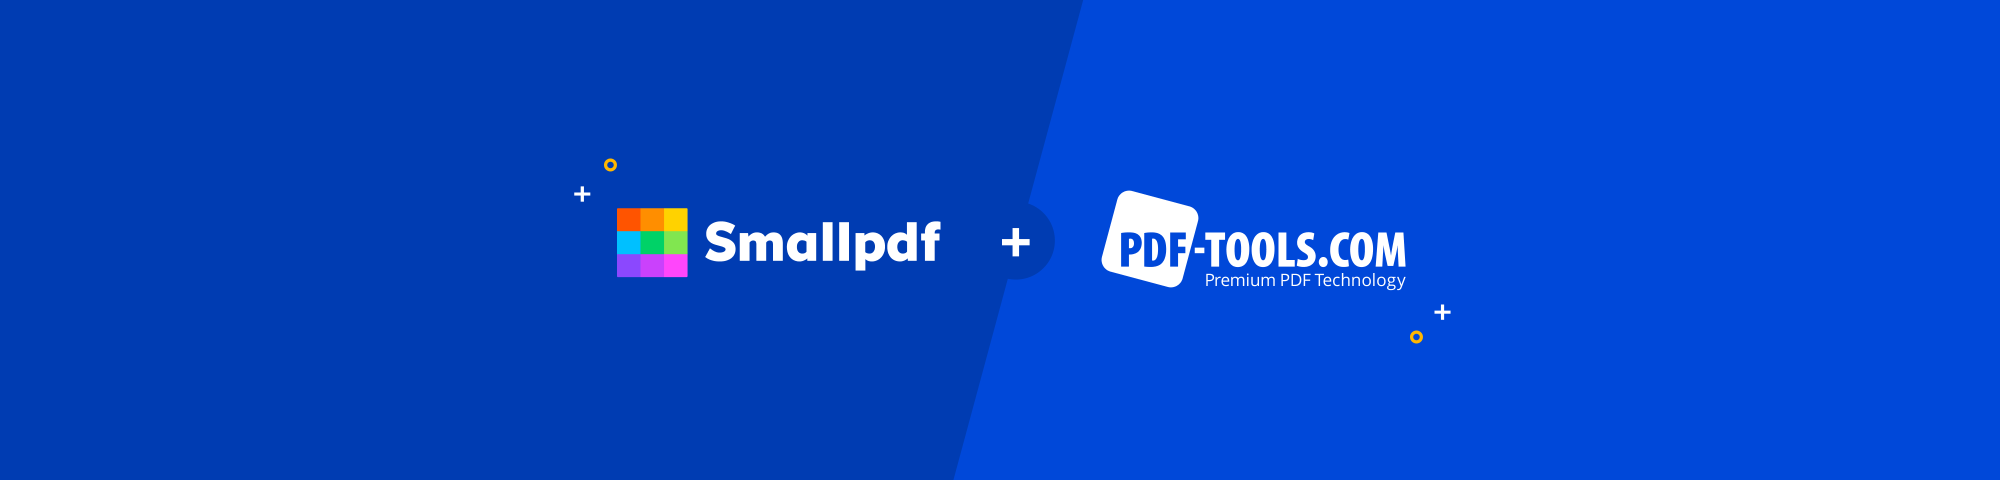 Smallpdf + PDF Tools header graphic